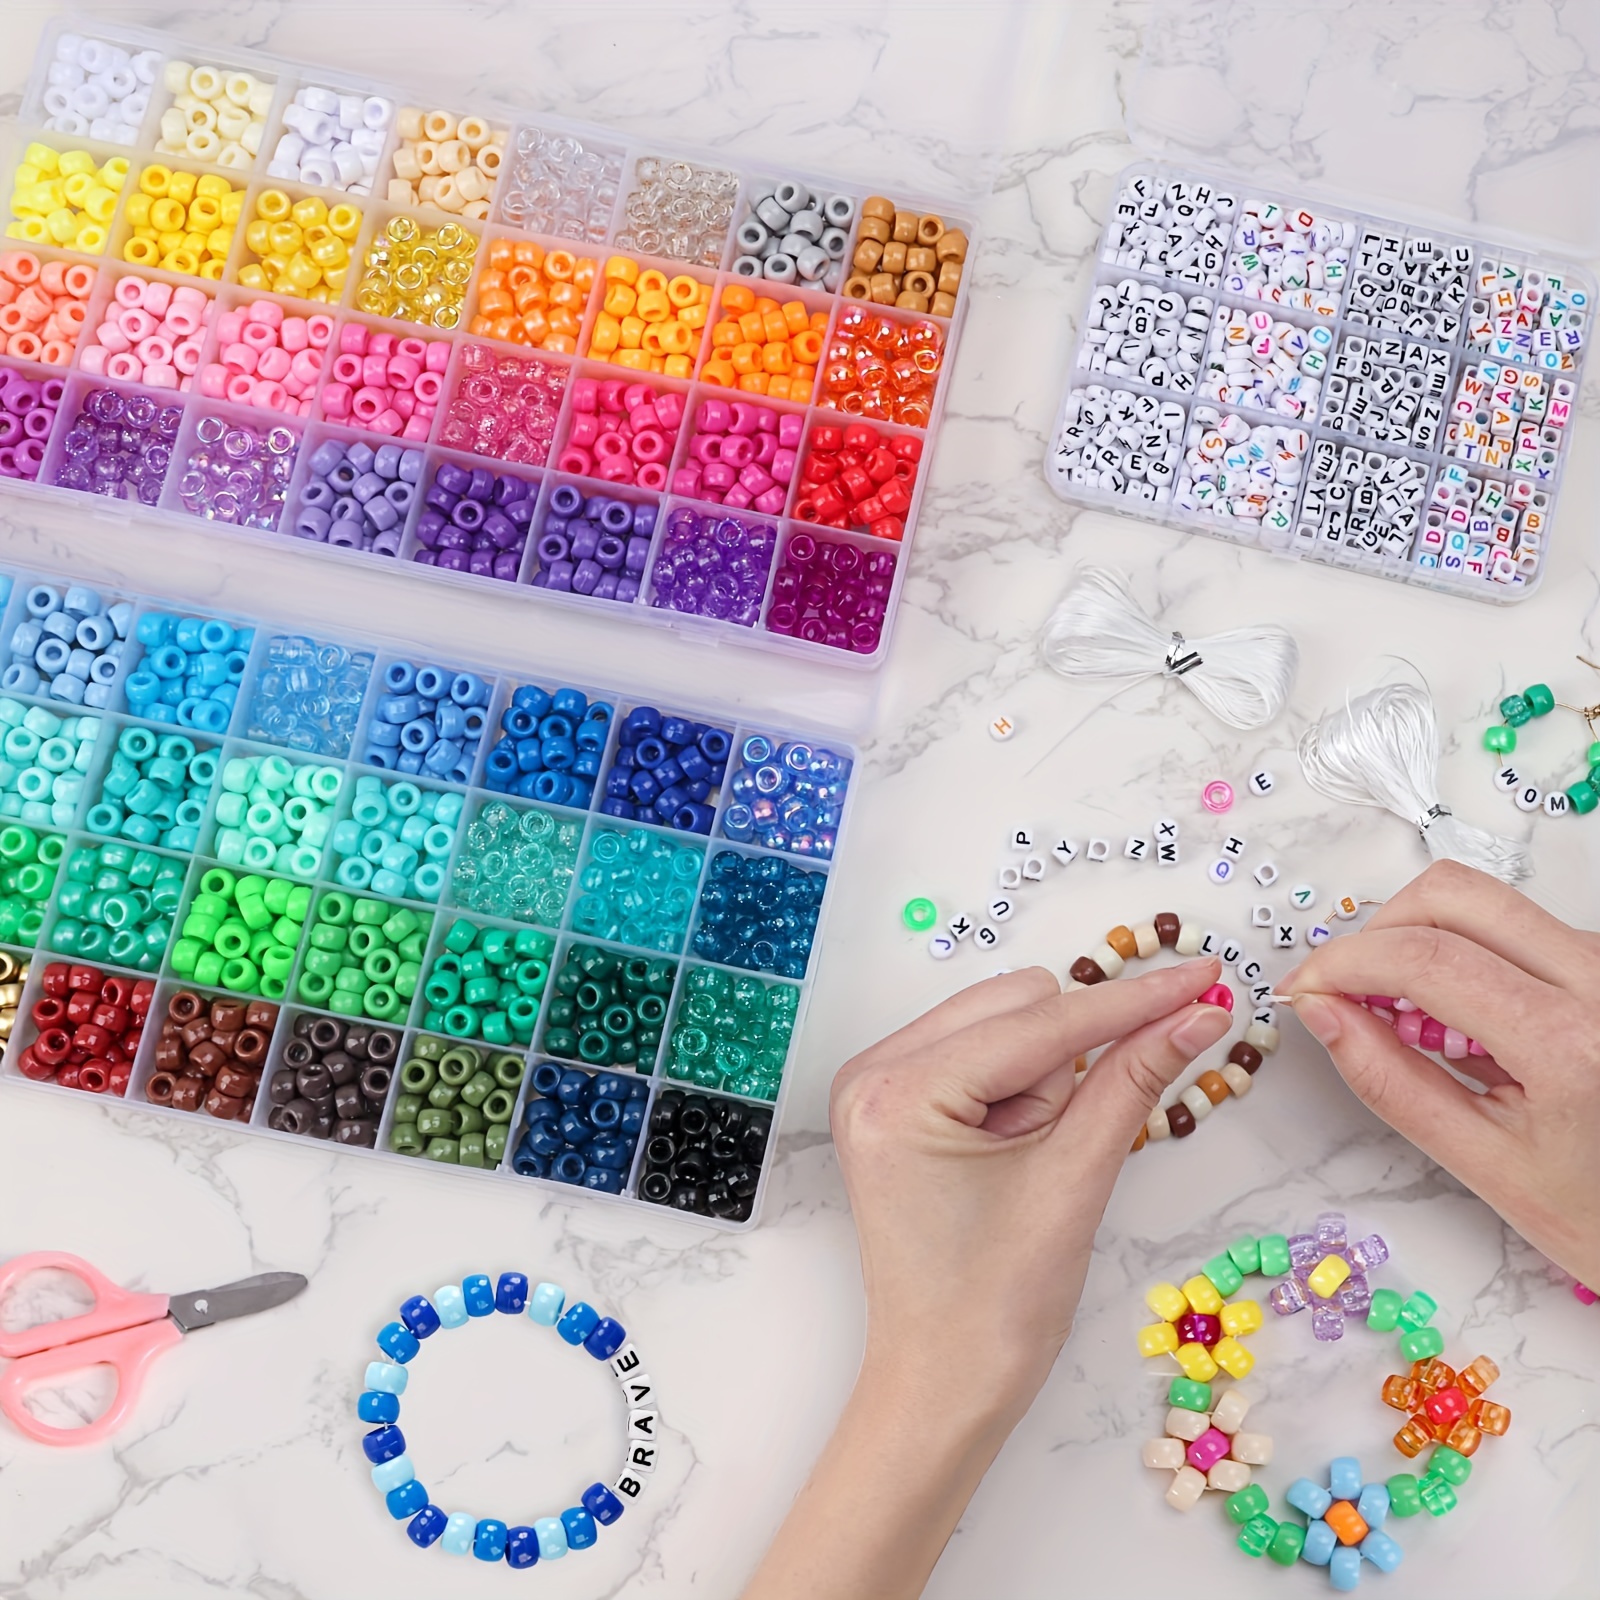  Vytung 1600pcs Letter Beads Alphabet Beads Pony Beads Bracelets  Jewelry Making Crafting Beads Kit Set Rainbow Beads Box